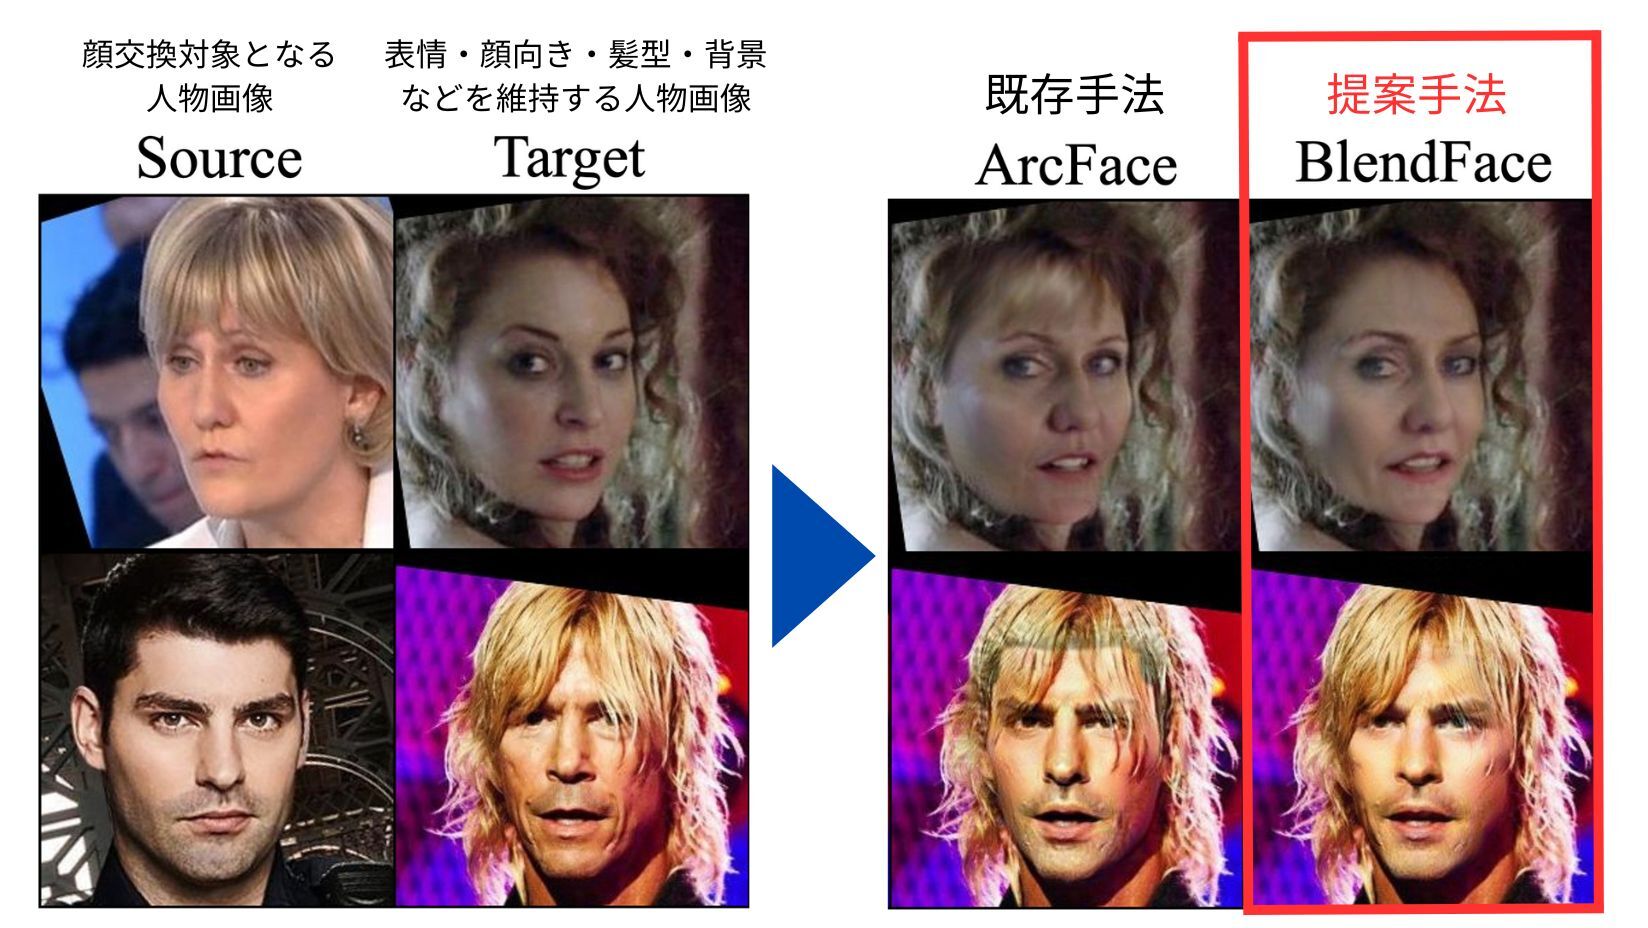 図1 既存手法（ArcFace）と提案手法（BlendFace）の比較